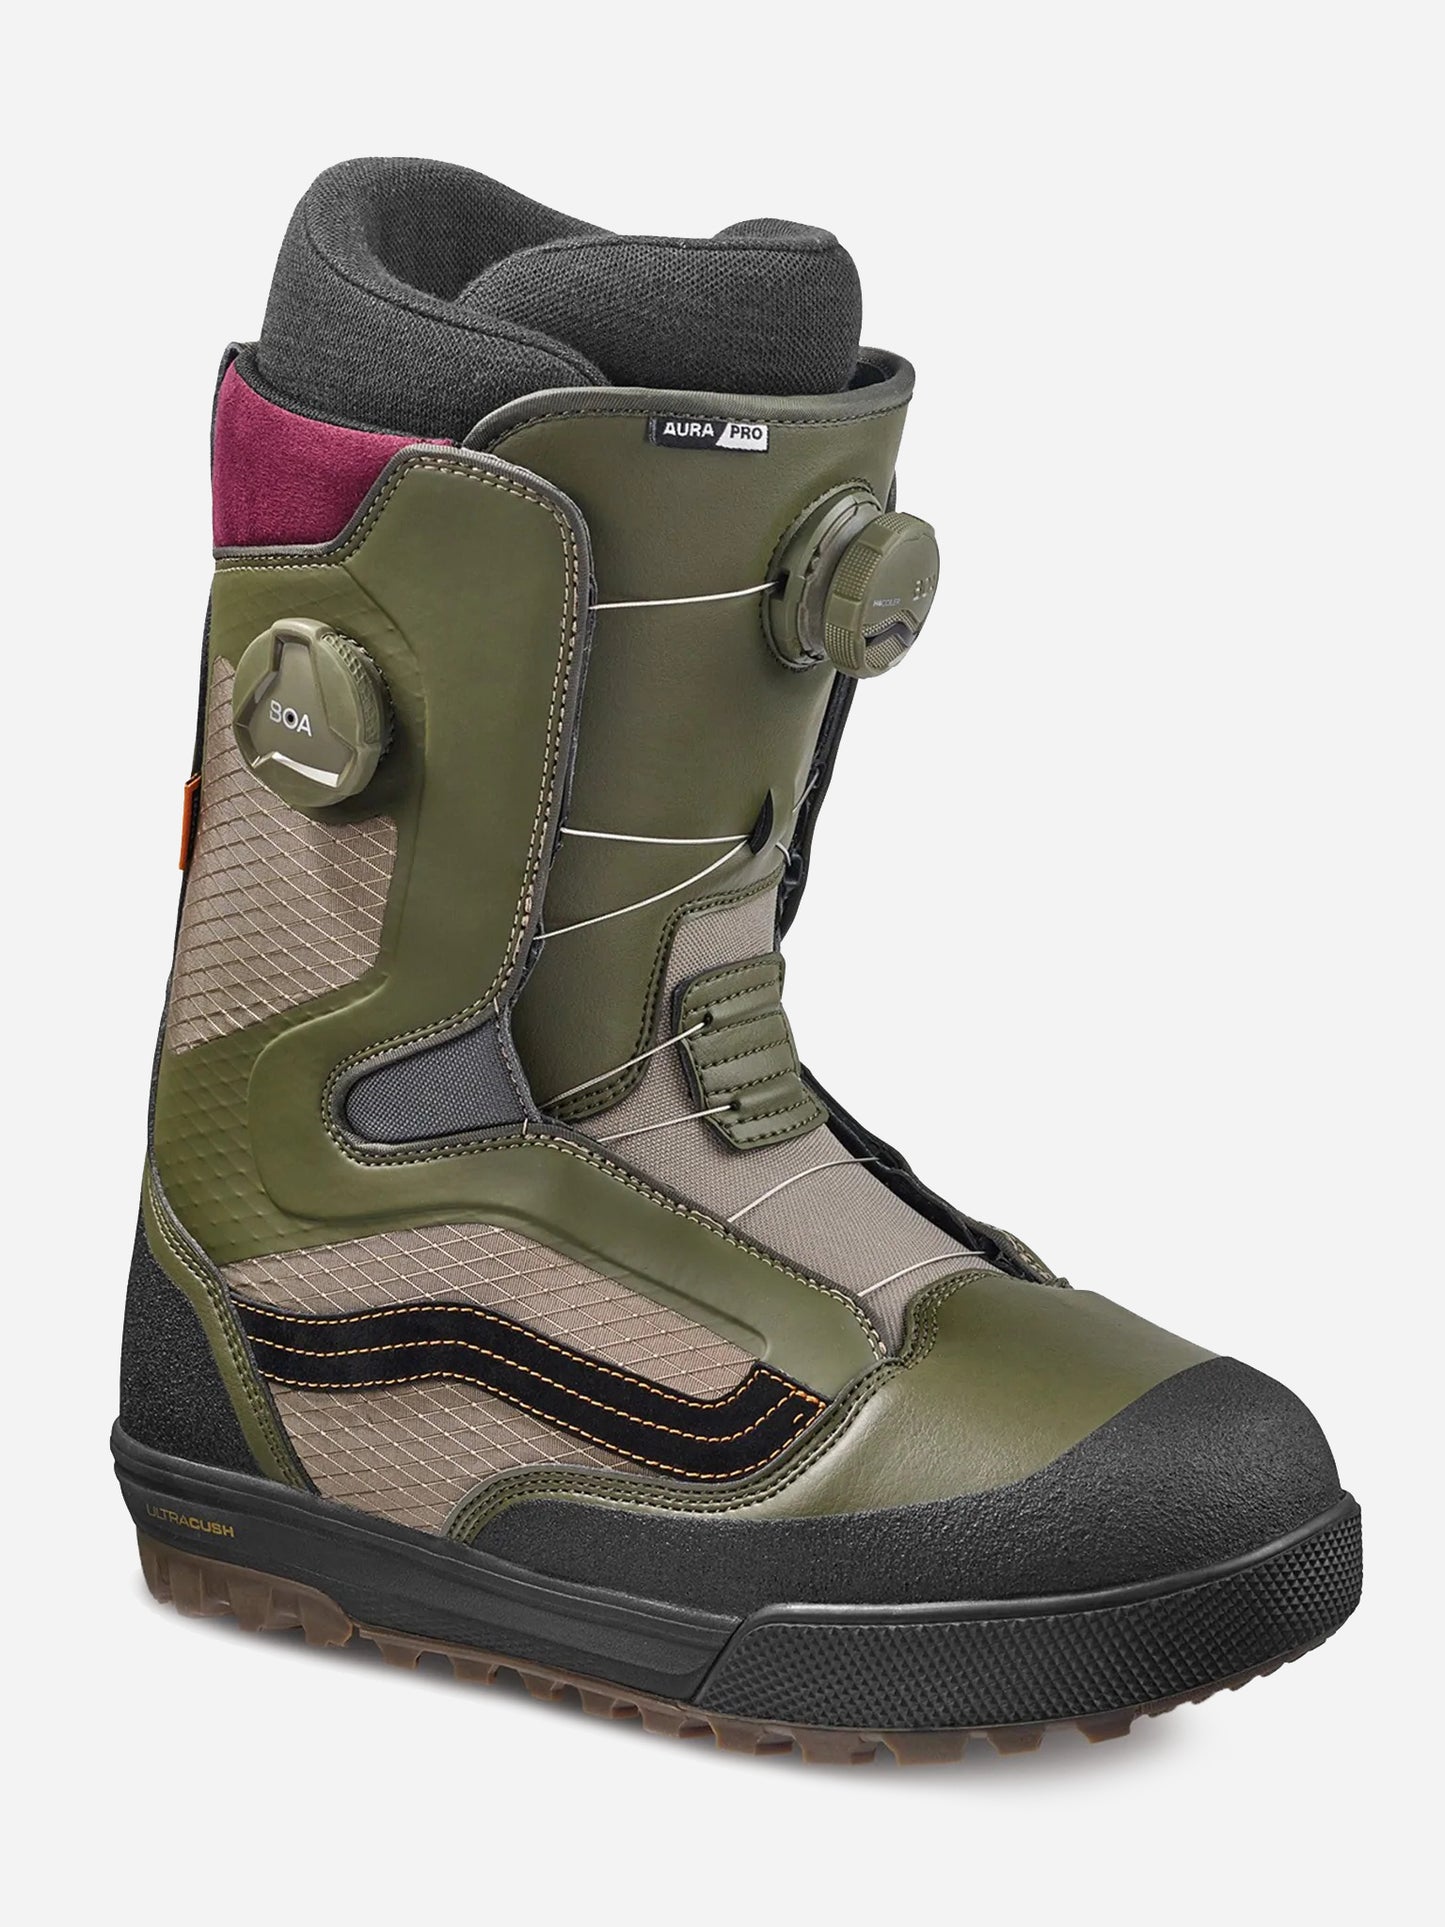 Vans Aura Pro Snowboard Boots 2022